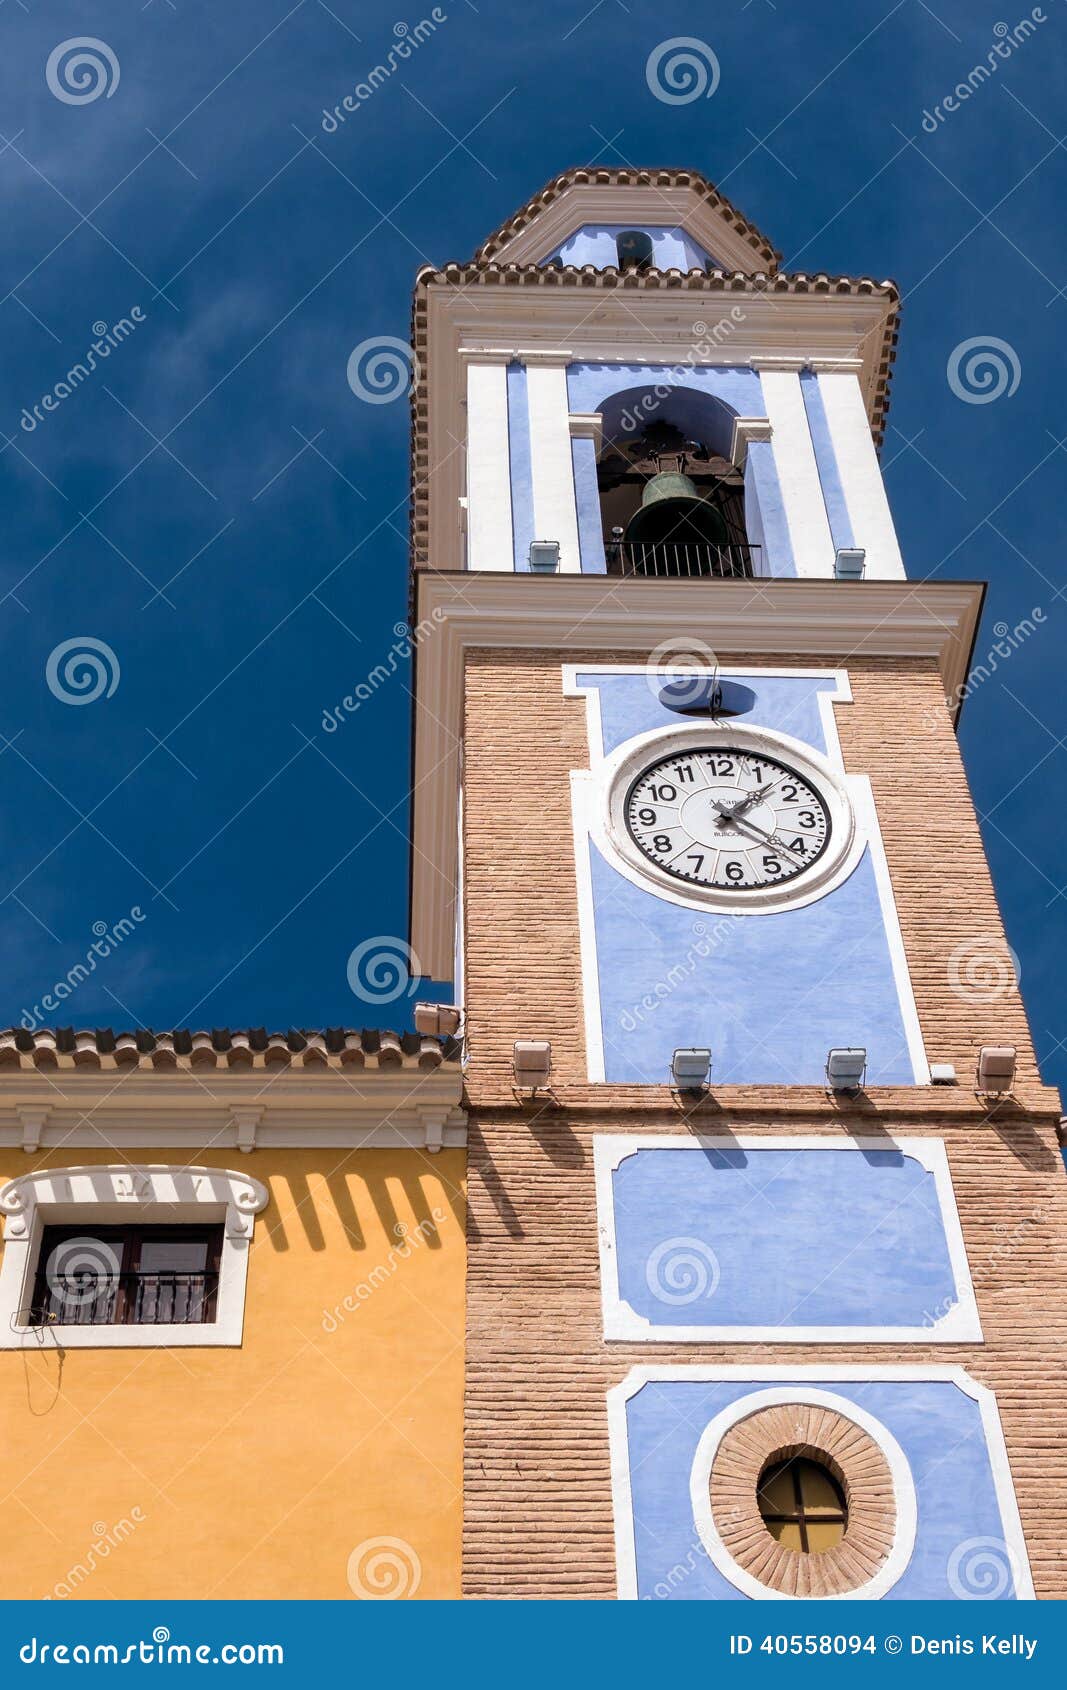 historic clock tower in mula, spain